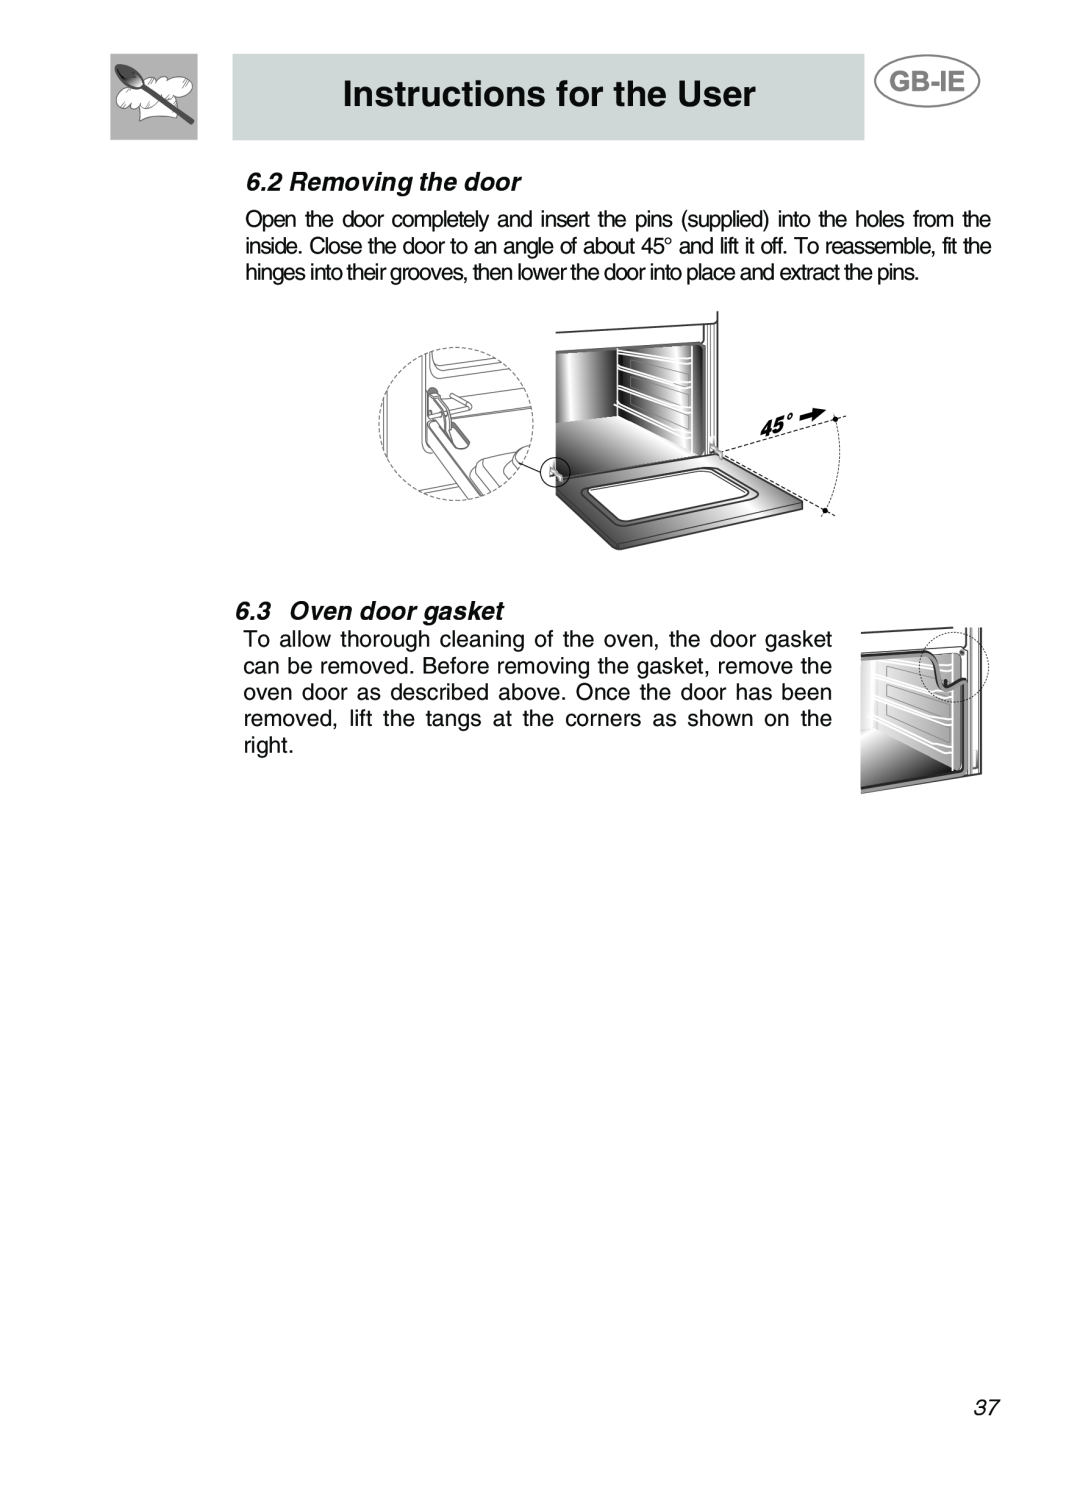 Smeg ALFA135V6 manual Removing the door, Oven door gasket, Instructions for the User 